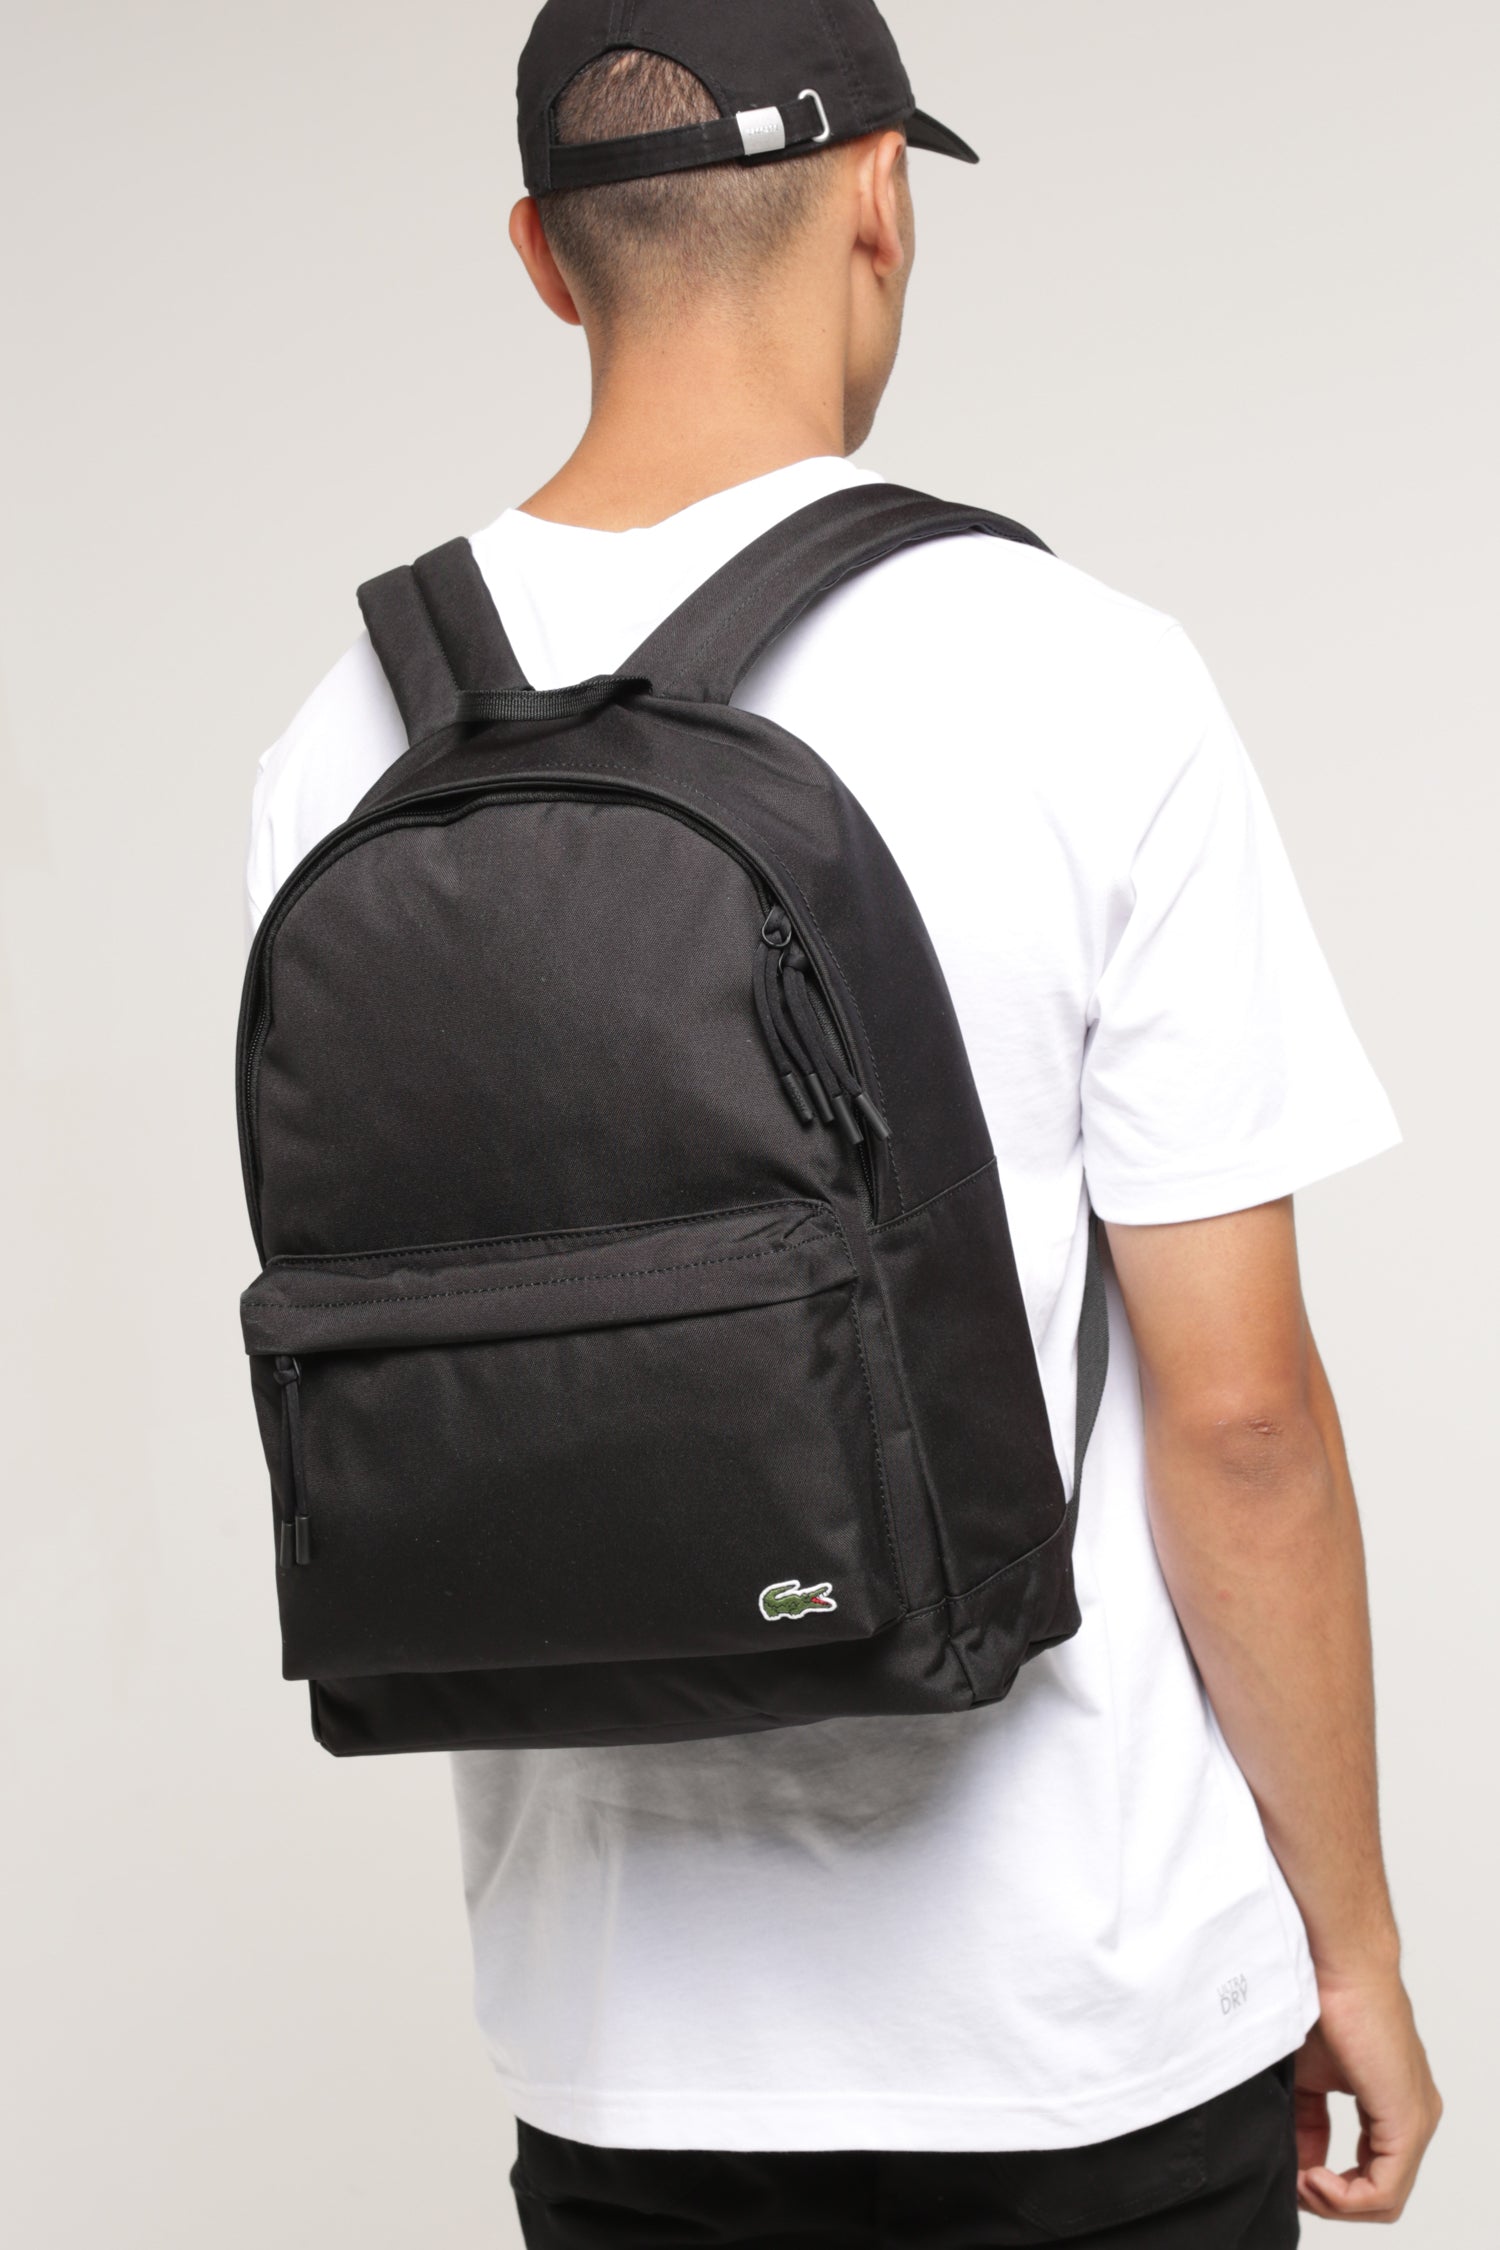 Lacoste Neocroc Backpack Black 